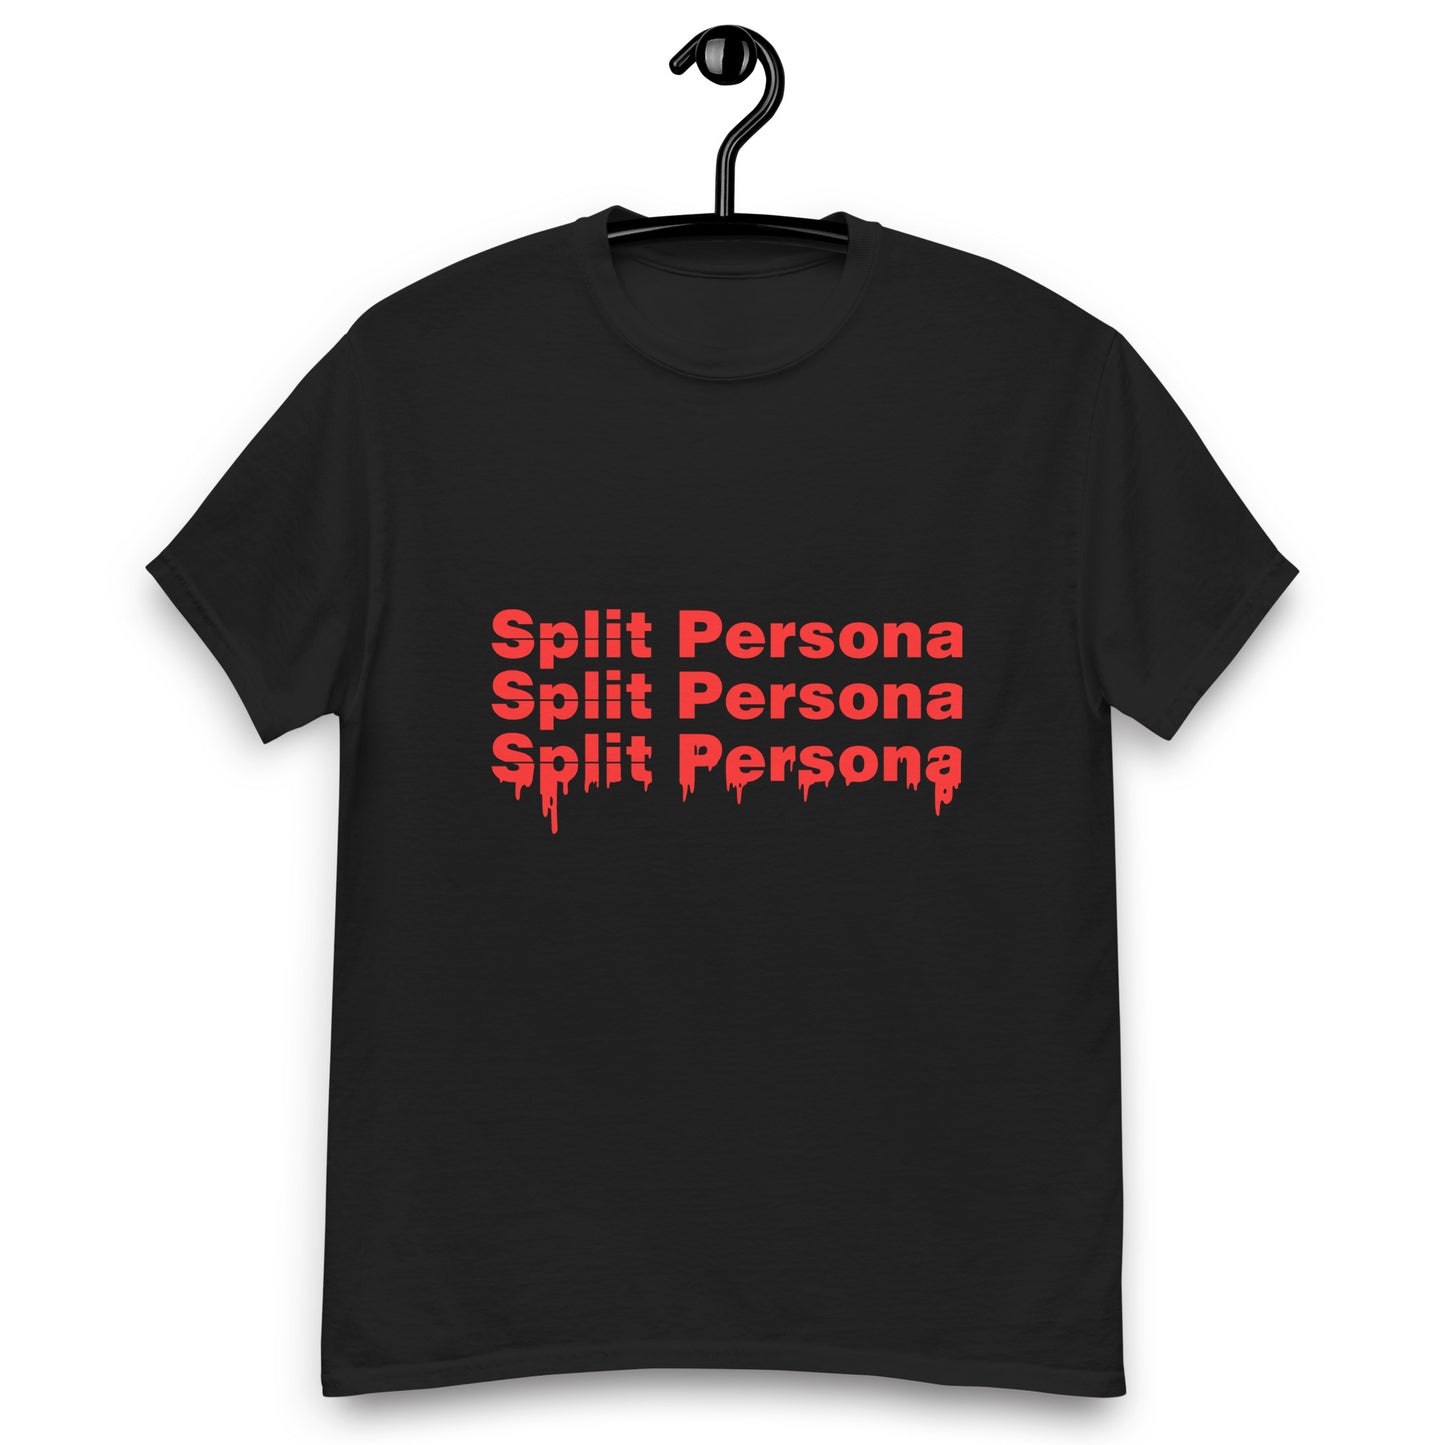 Split Persona "Melting" T-Shirt